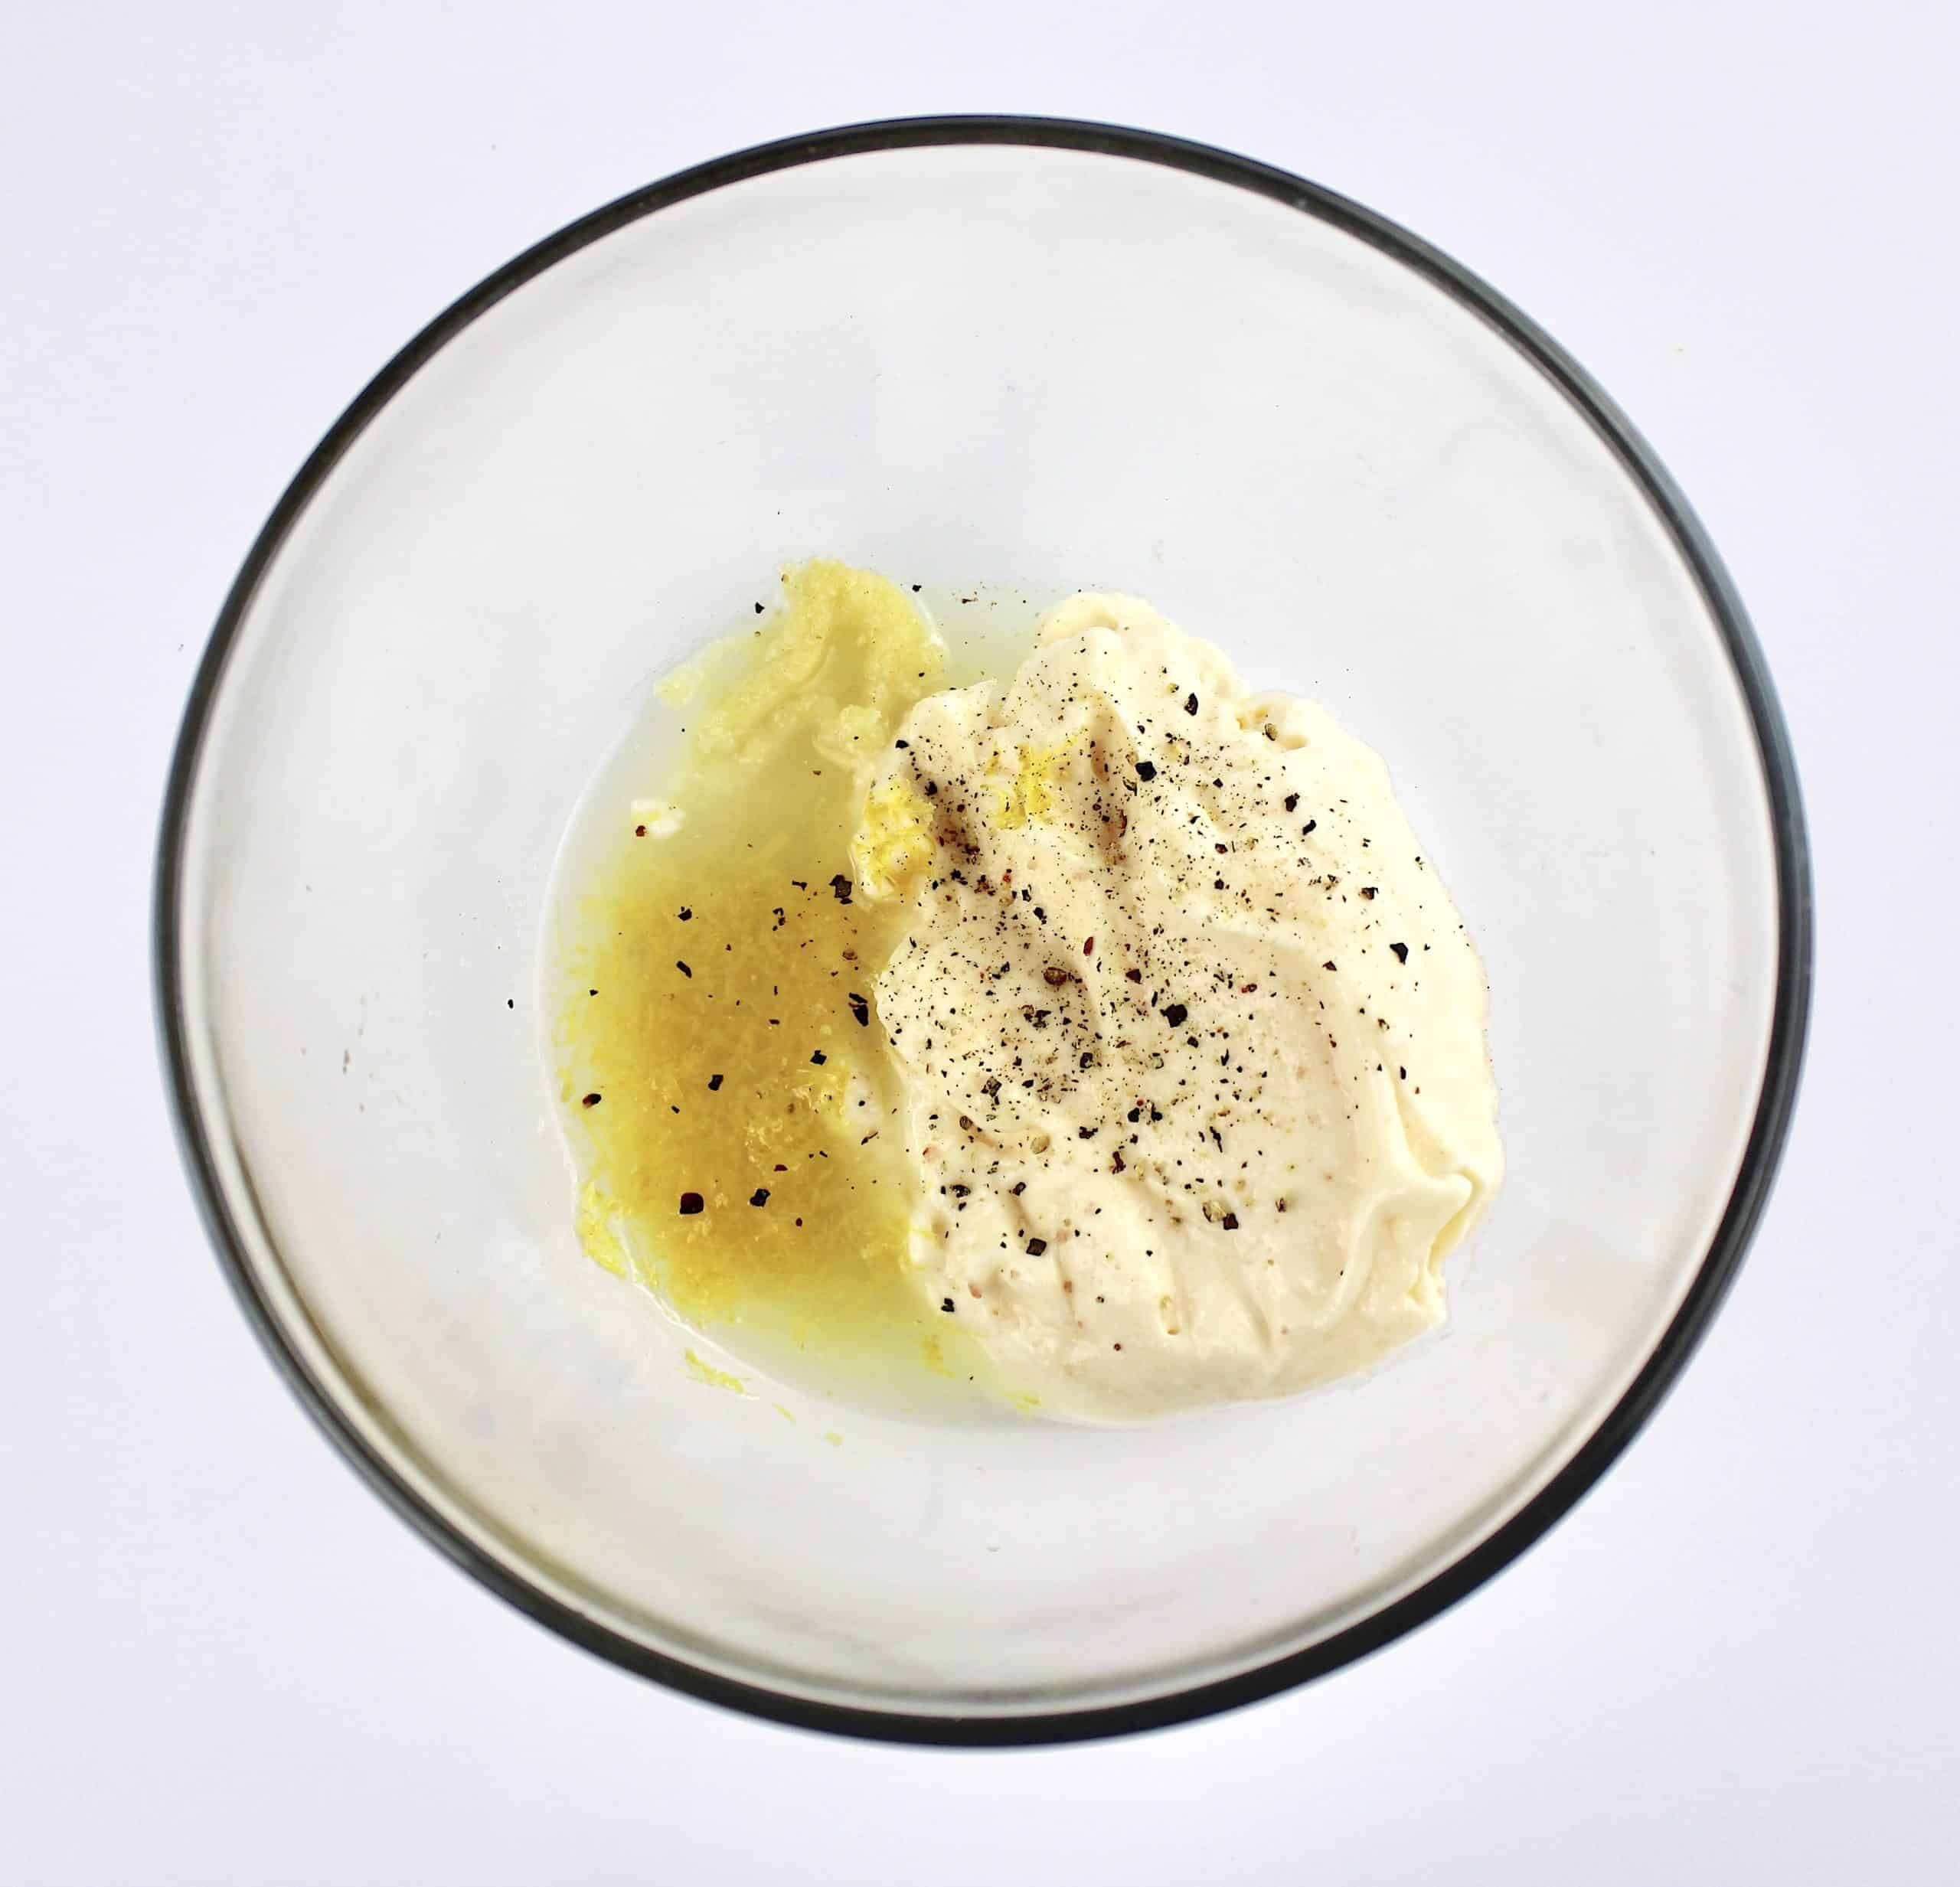 garlic aioli ingredients in glass bowl unmixed